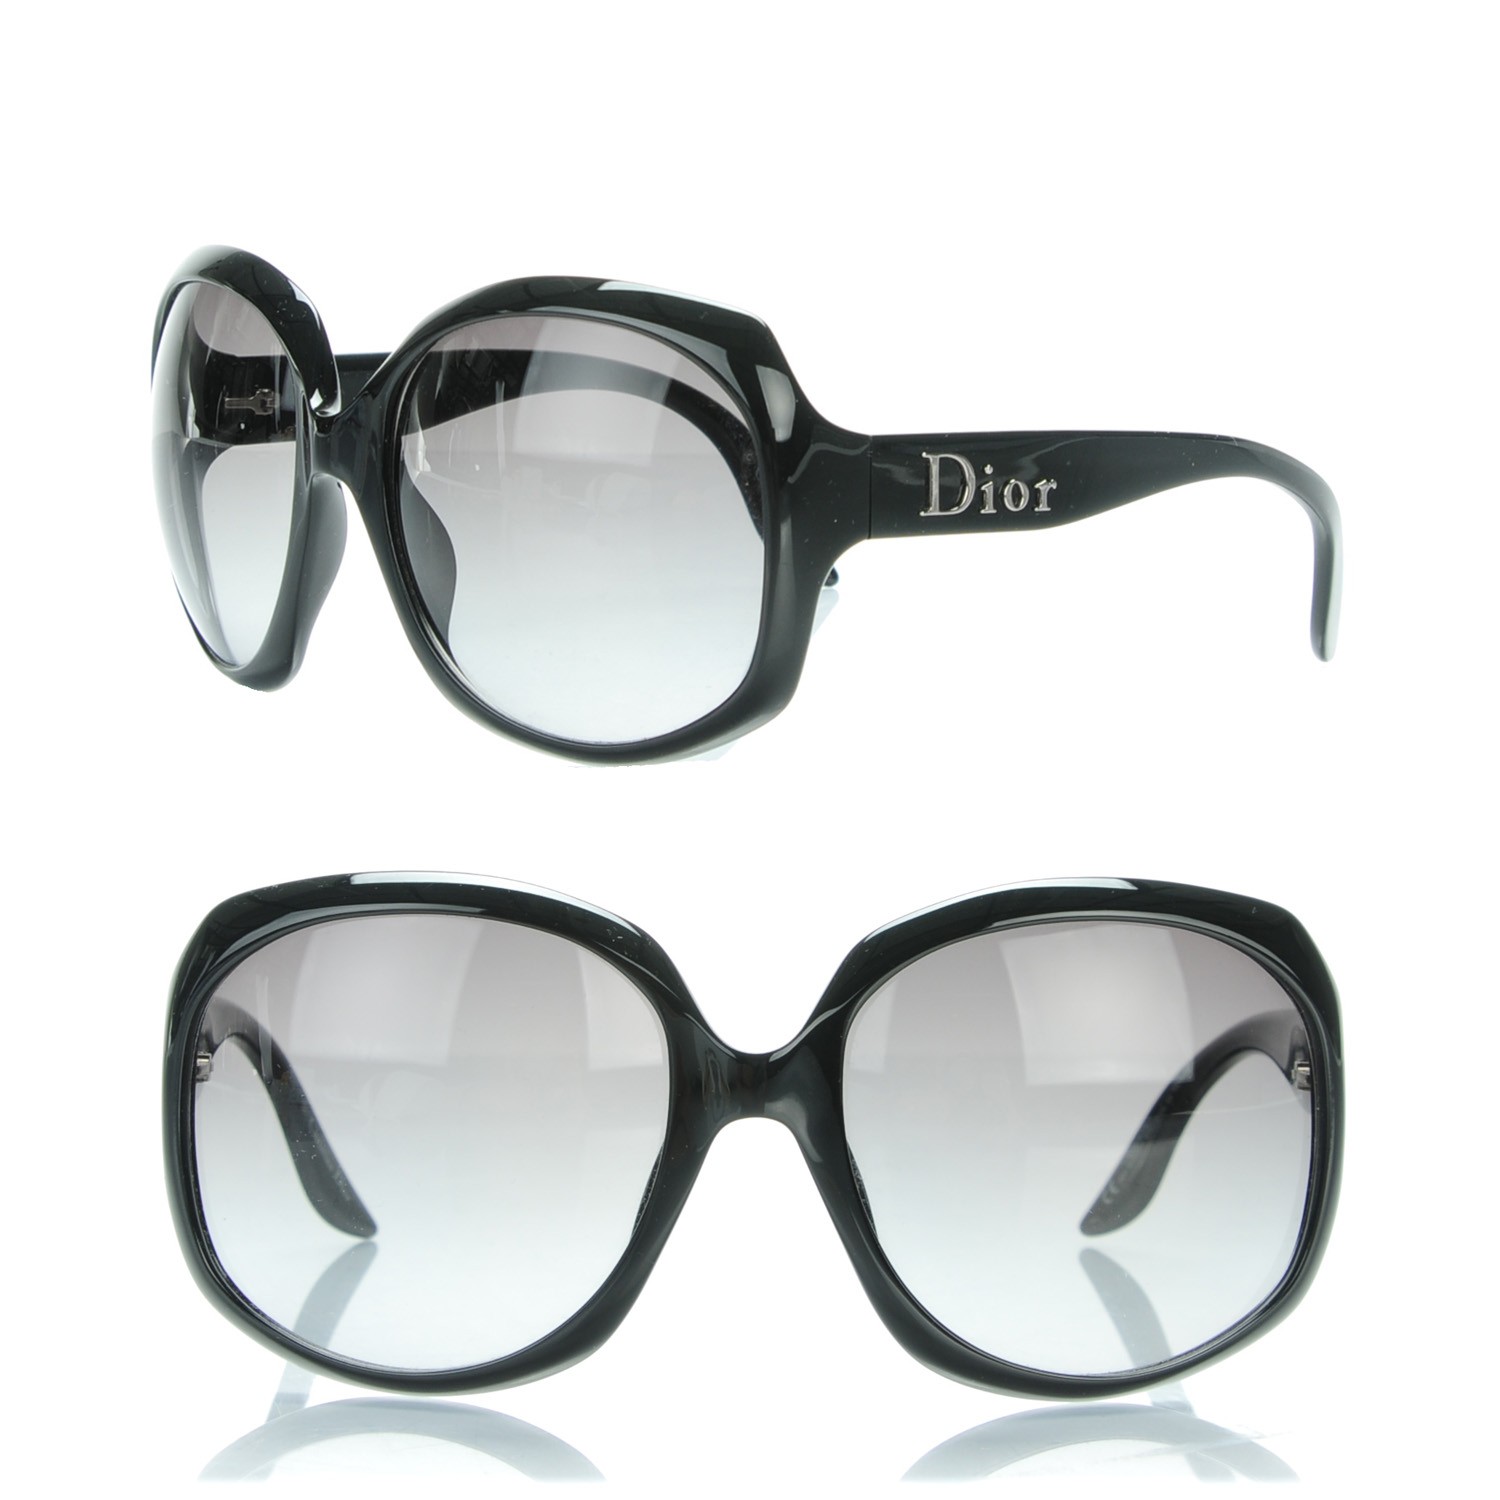 CHRISTIAN DIOR Glossy 1 Sunglasses Black 143601